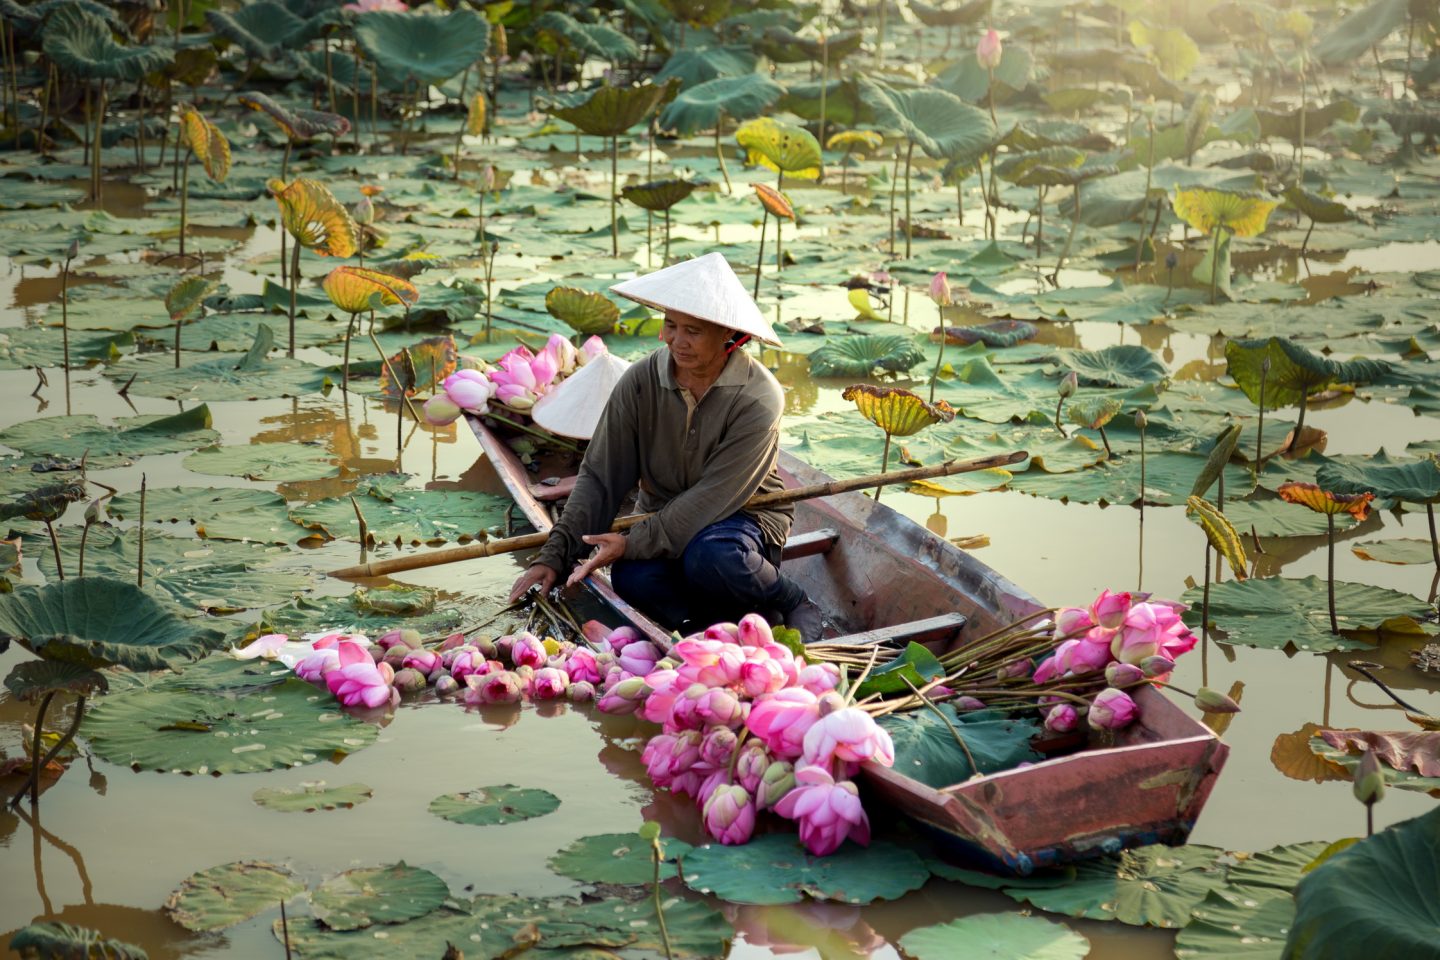 Woman in a boat harvesting lotus in the river in Vietnam